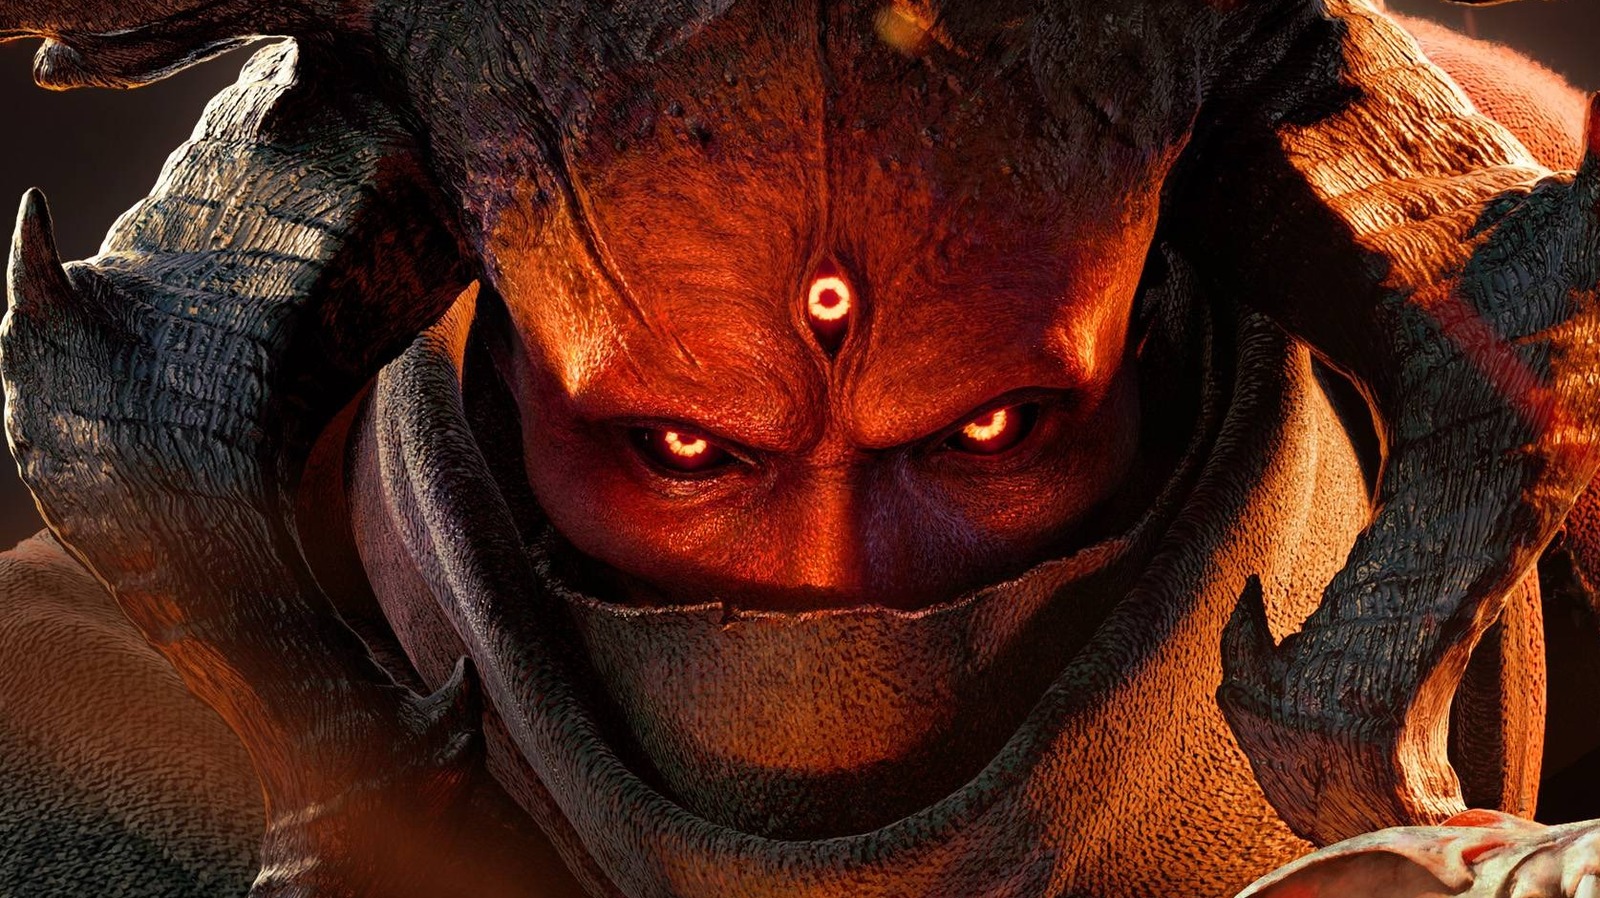 Metal: Hellsinger Is A Rhythm Action FPS Inspired By Doom - GameSpot